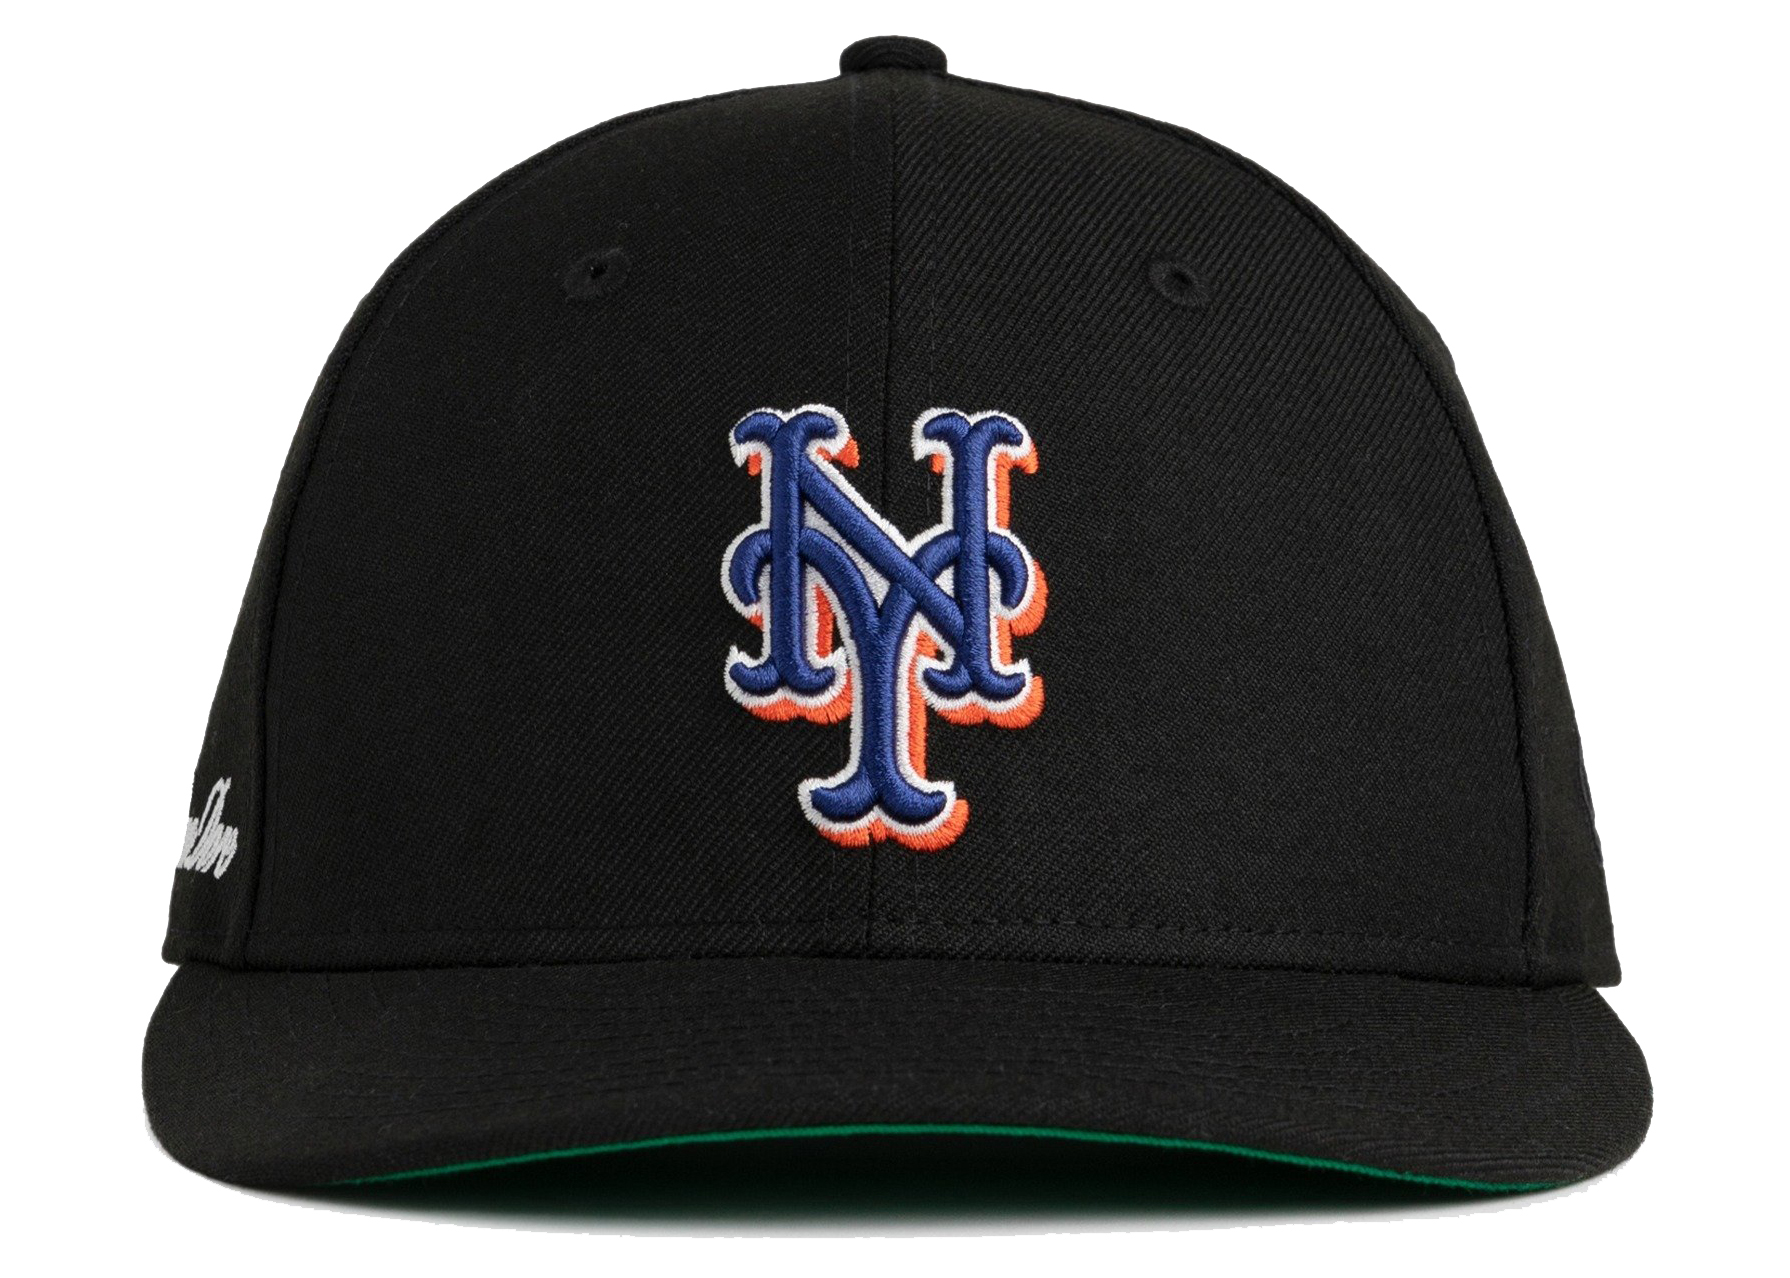 Aime Leon Dore x New Era Mets Hat Black